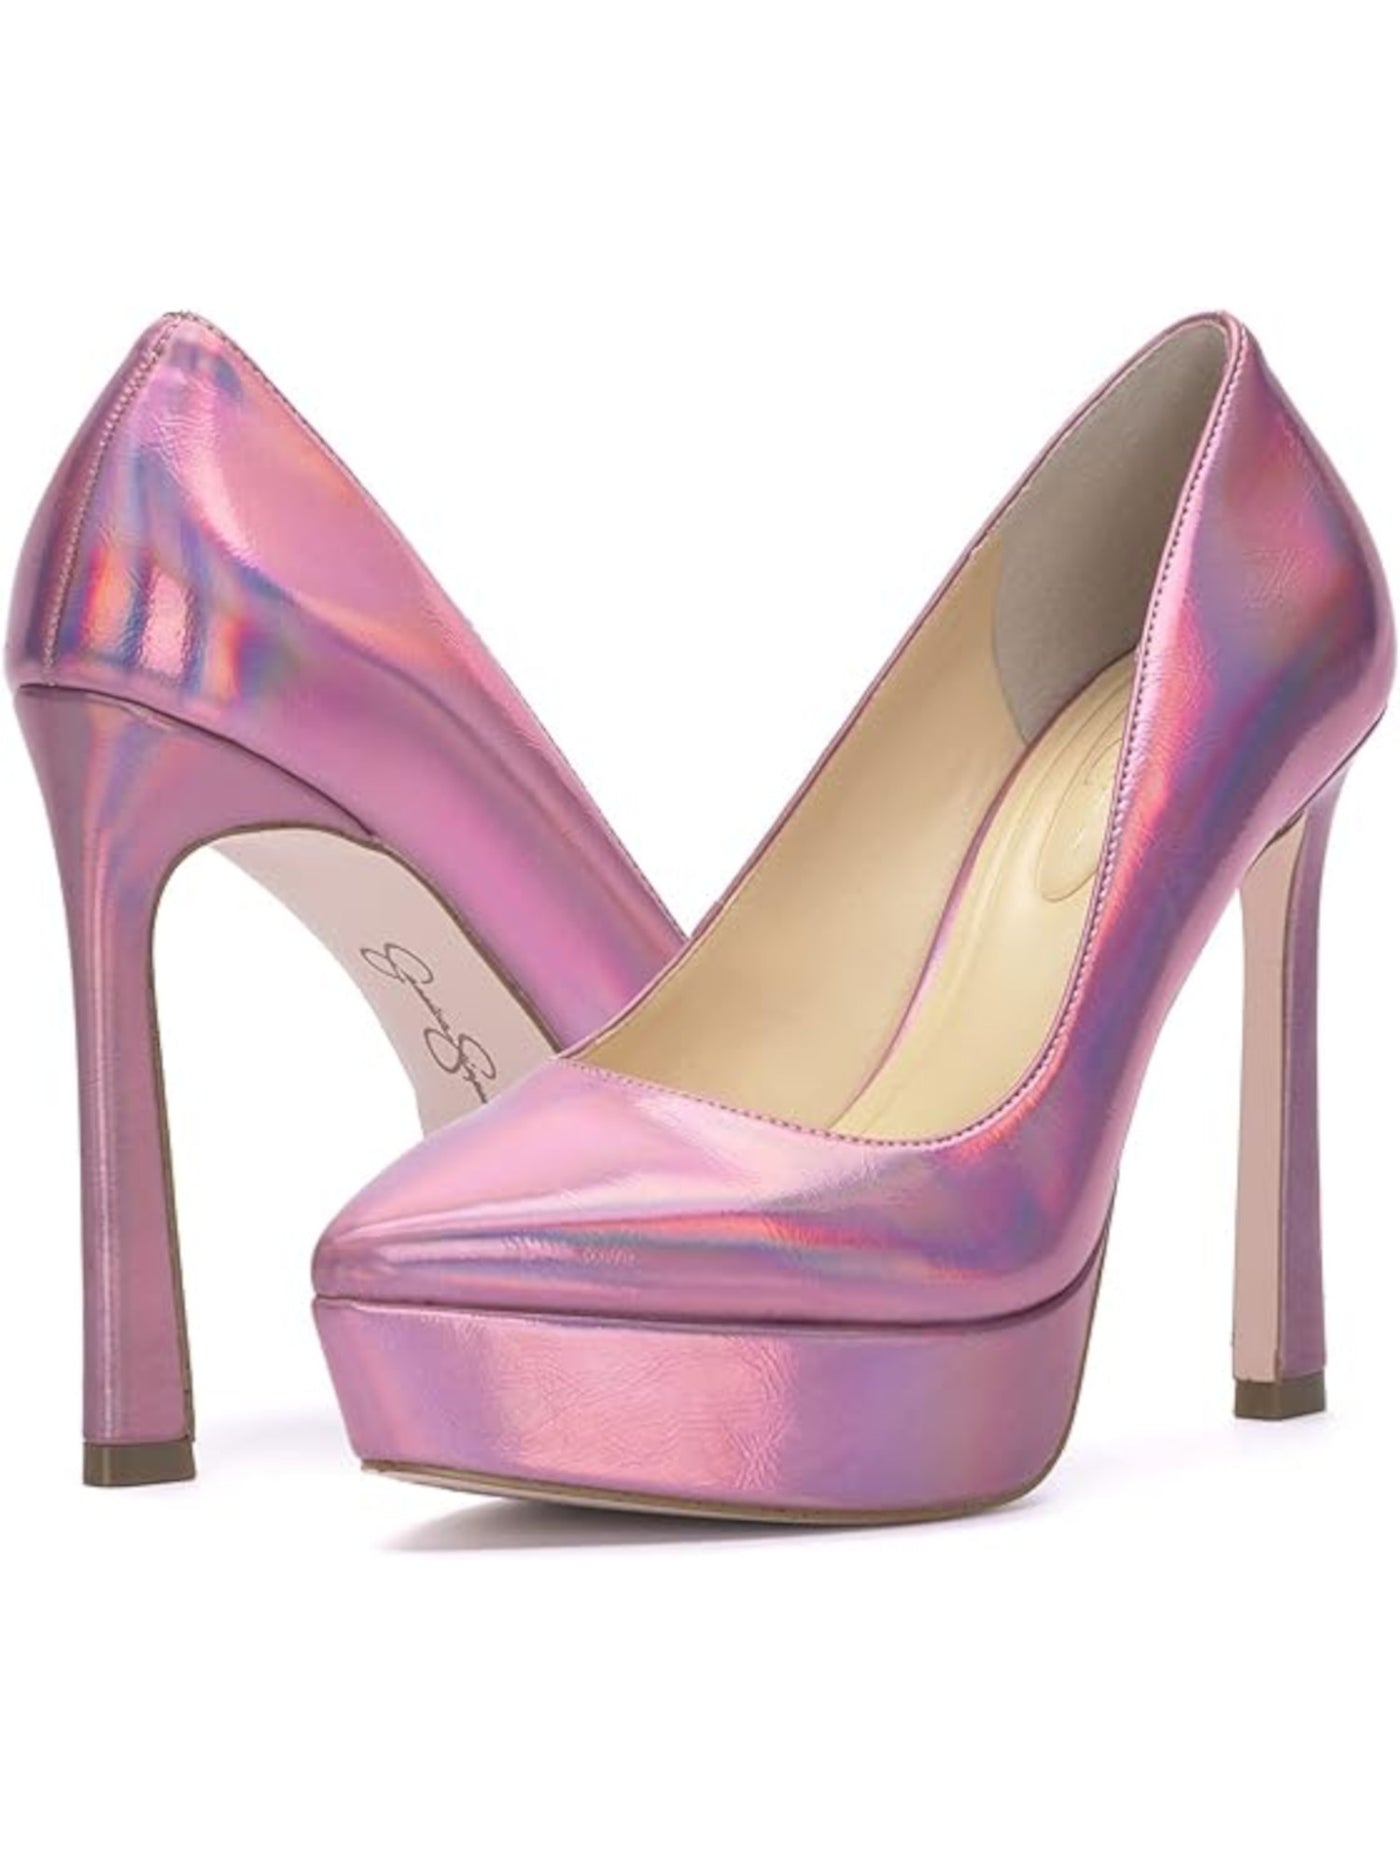 JESSICA SIMPSON Womens Pink 1" Platform Cushioned Jariah Pointed Toe Platform Slip On Dress Pumps Shoes 9 M